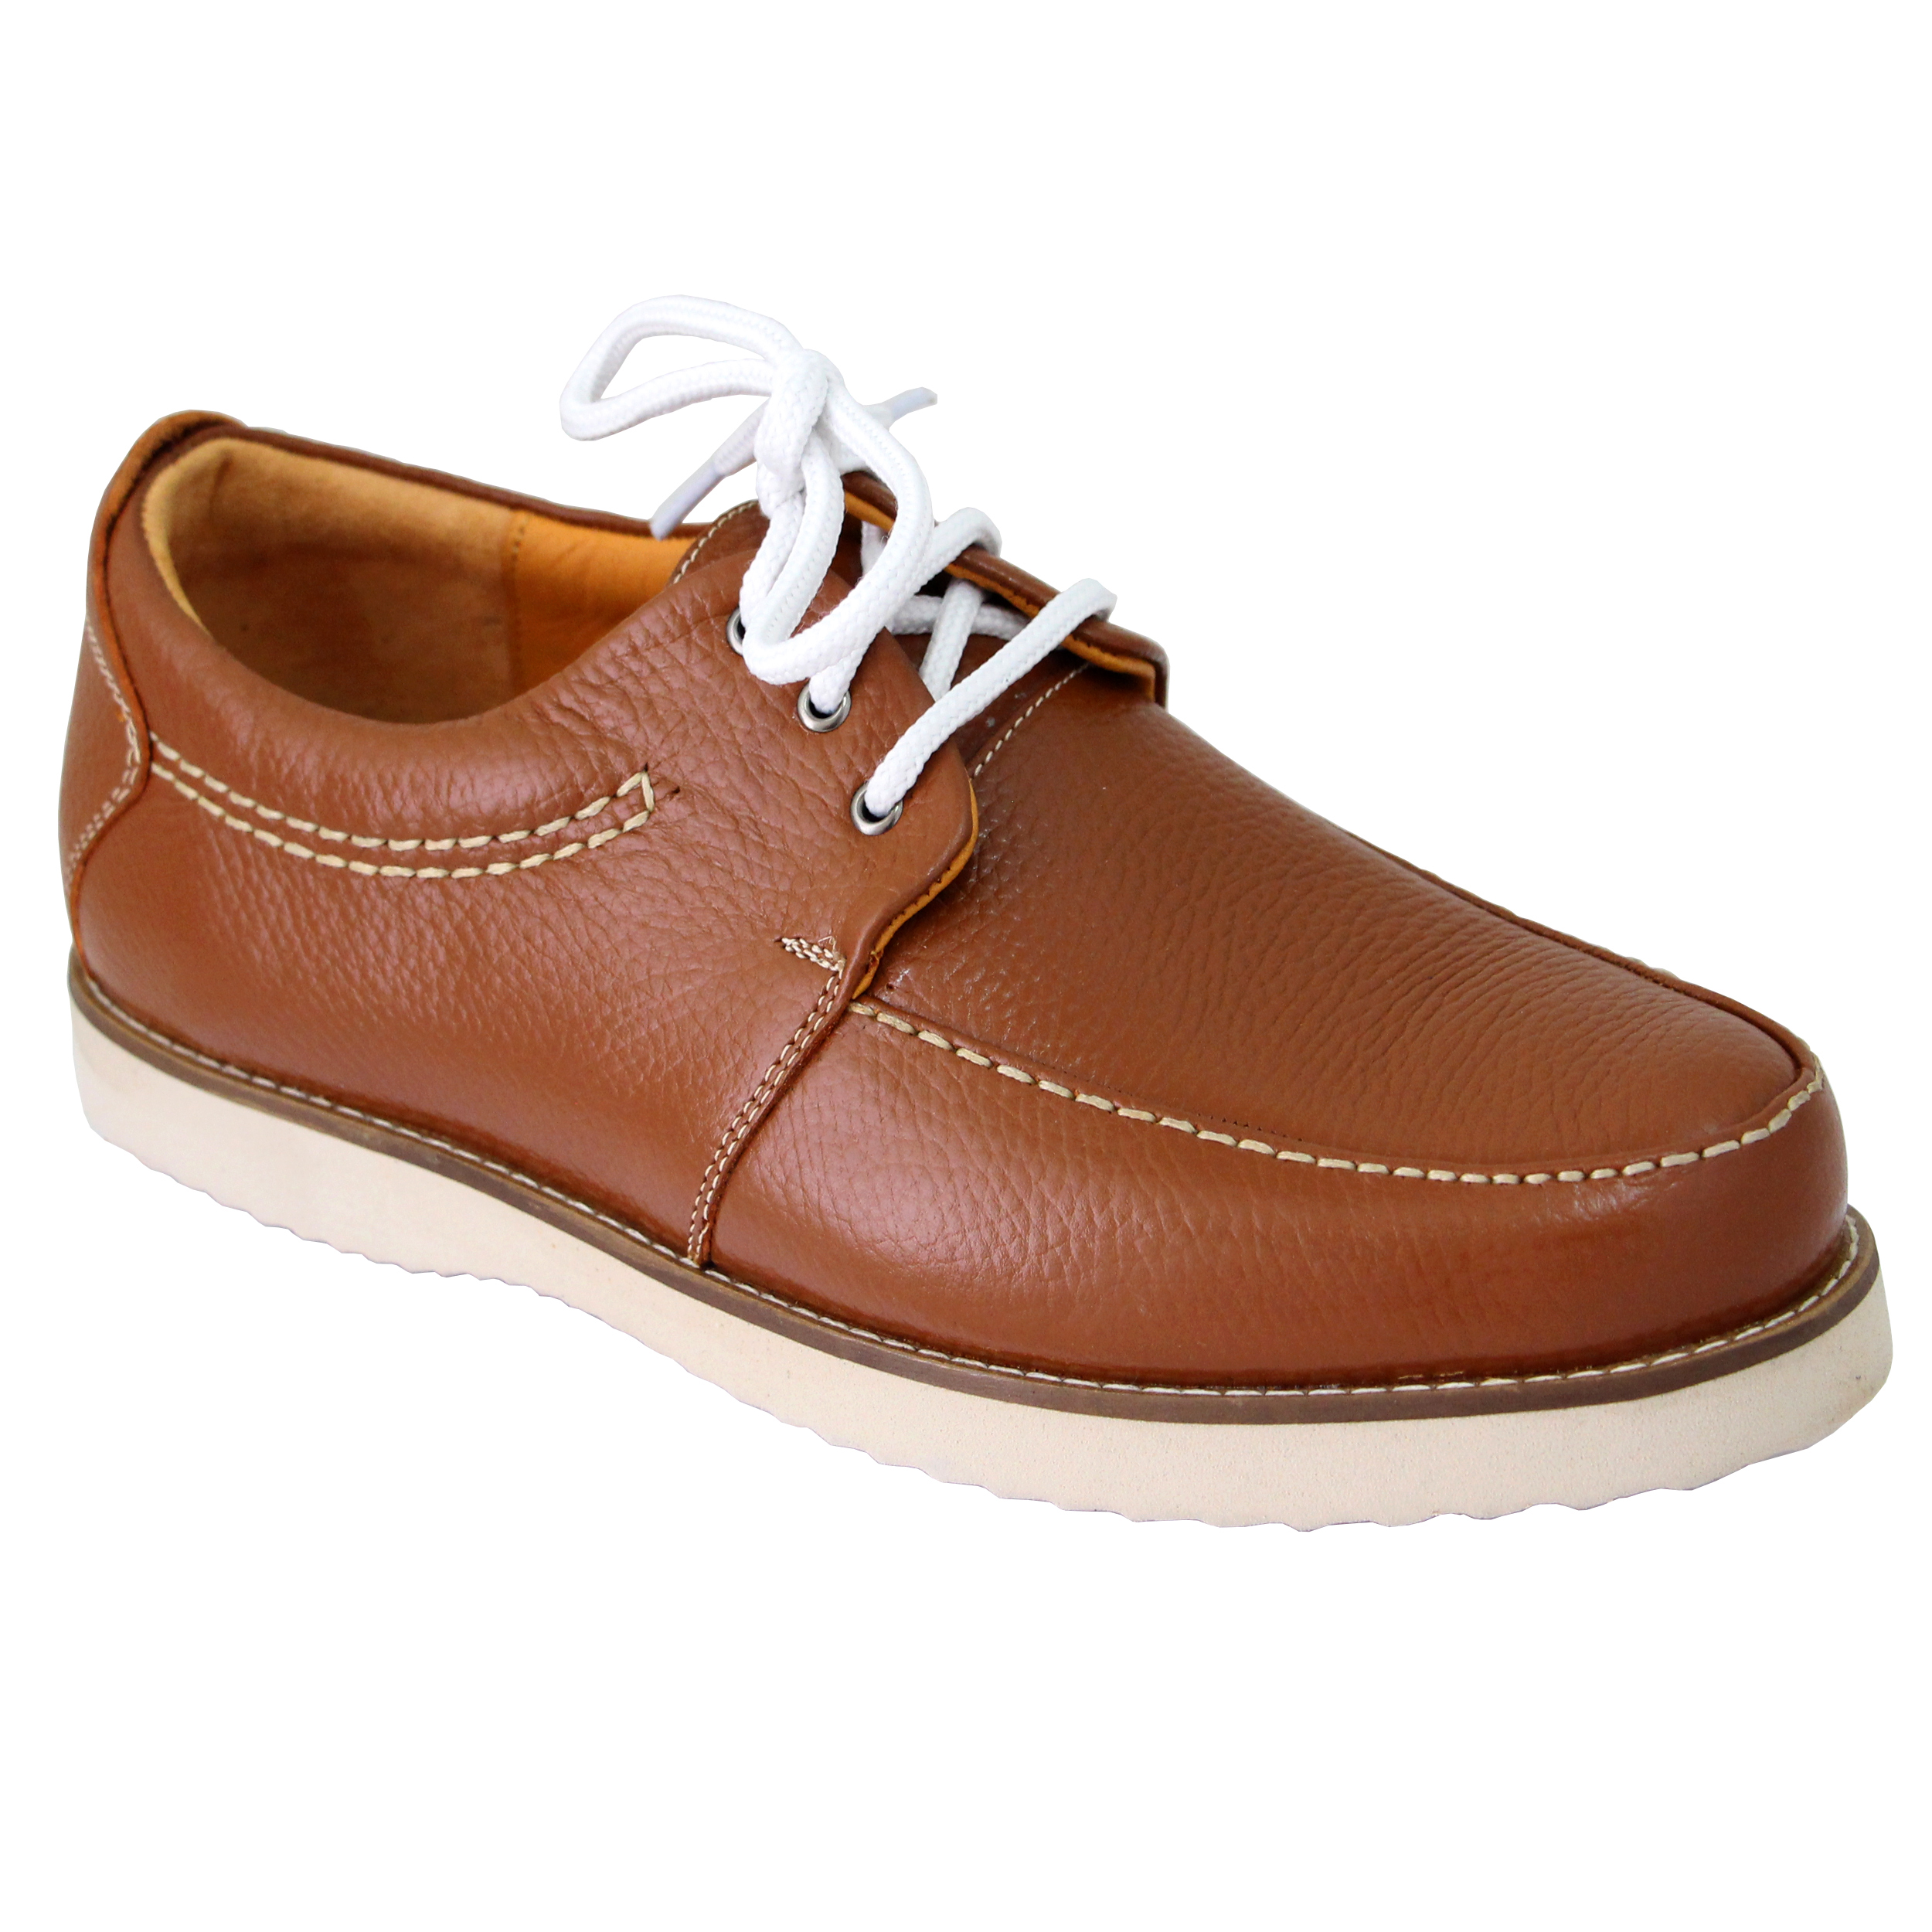 ADINCHARM leather men's casual shoes, DK101.as Model